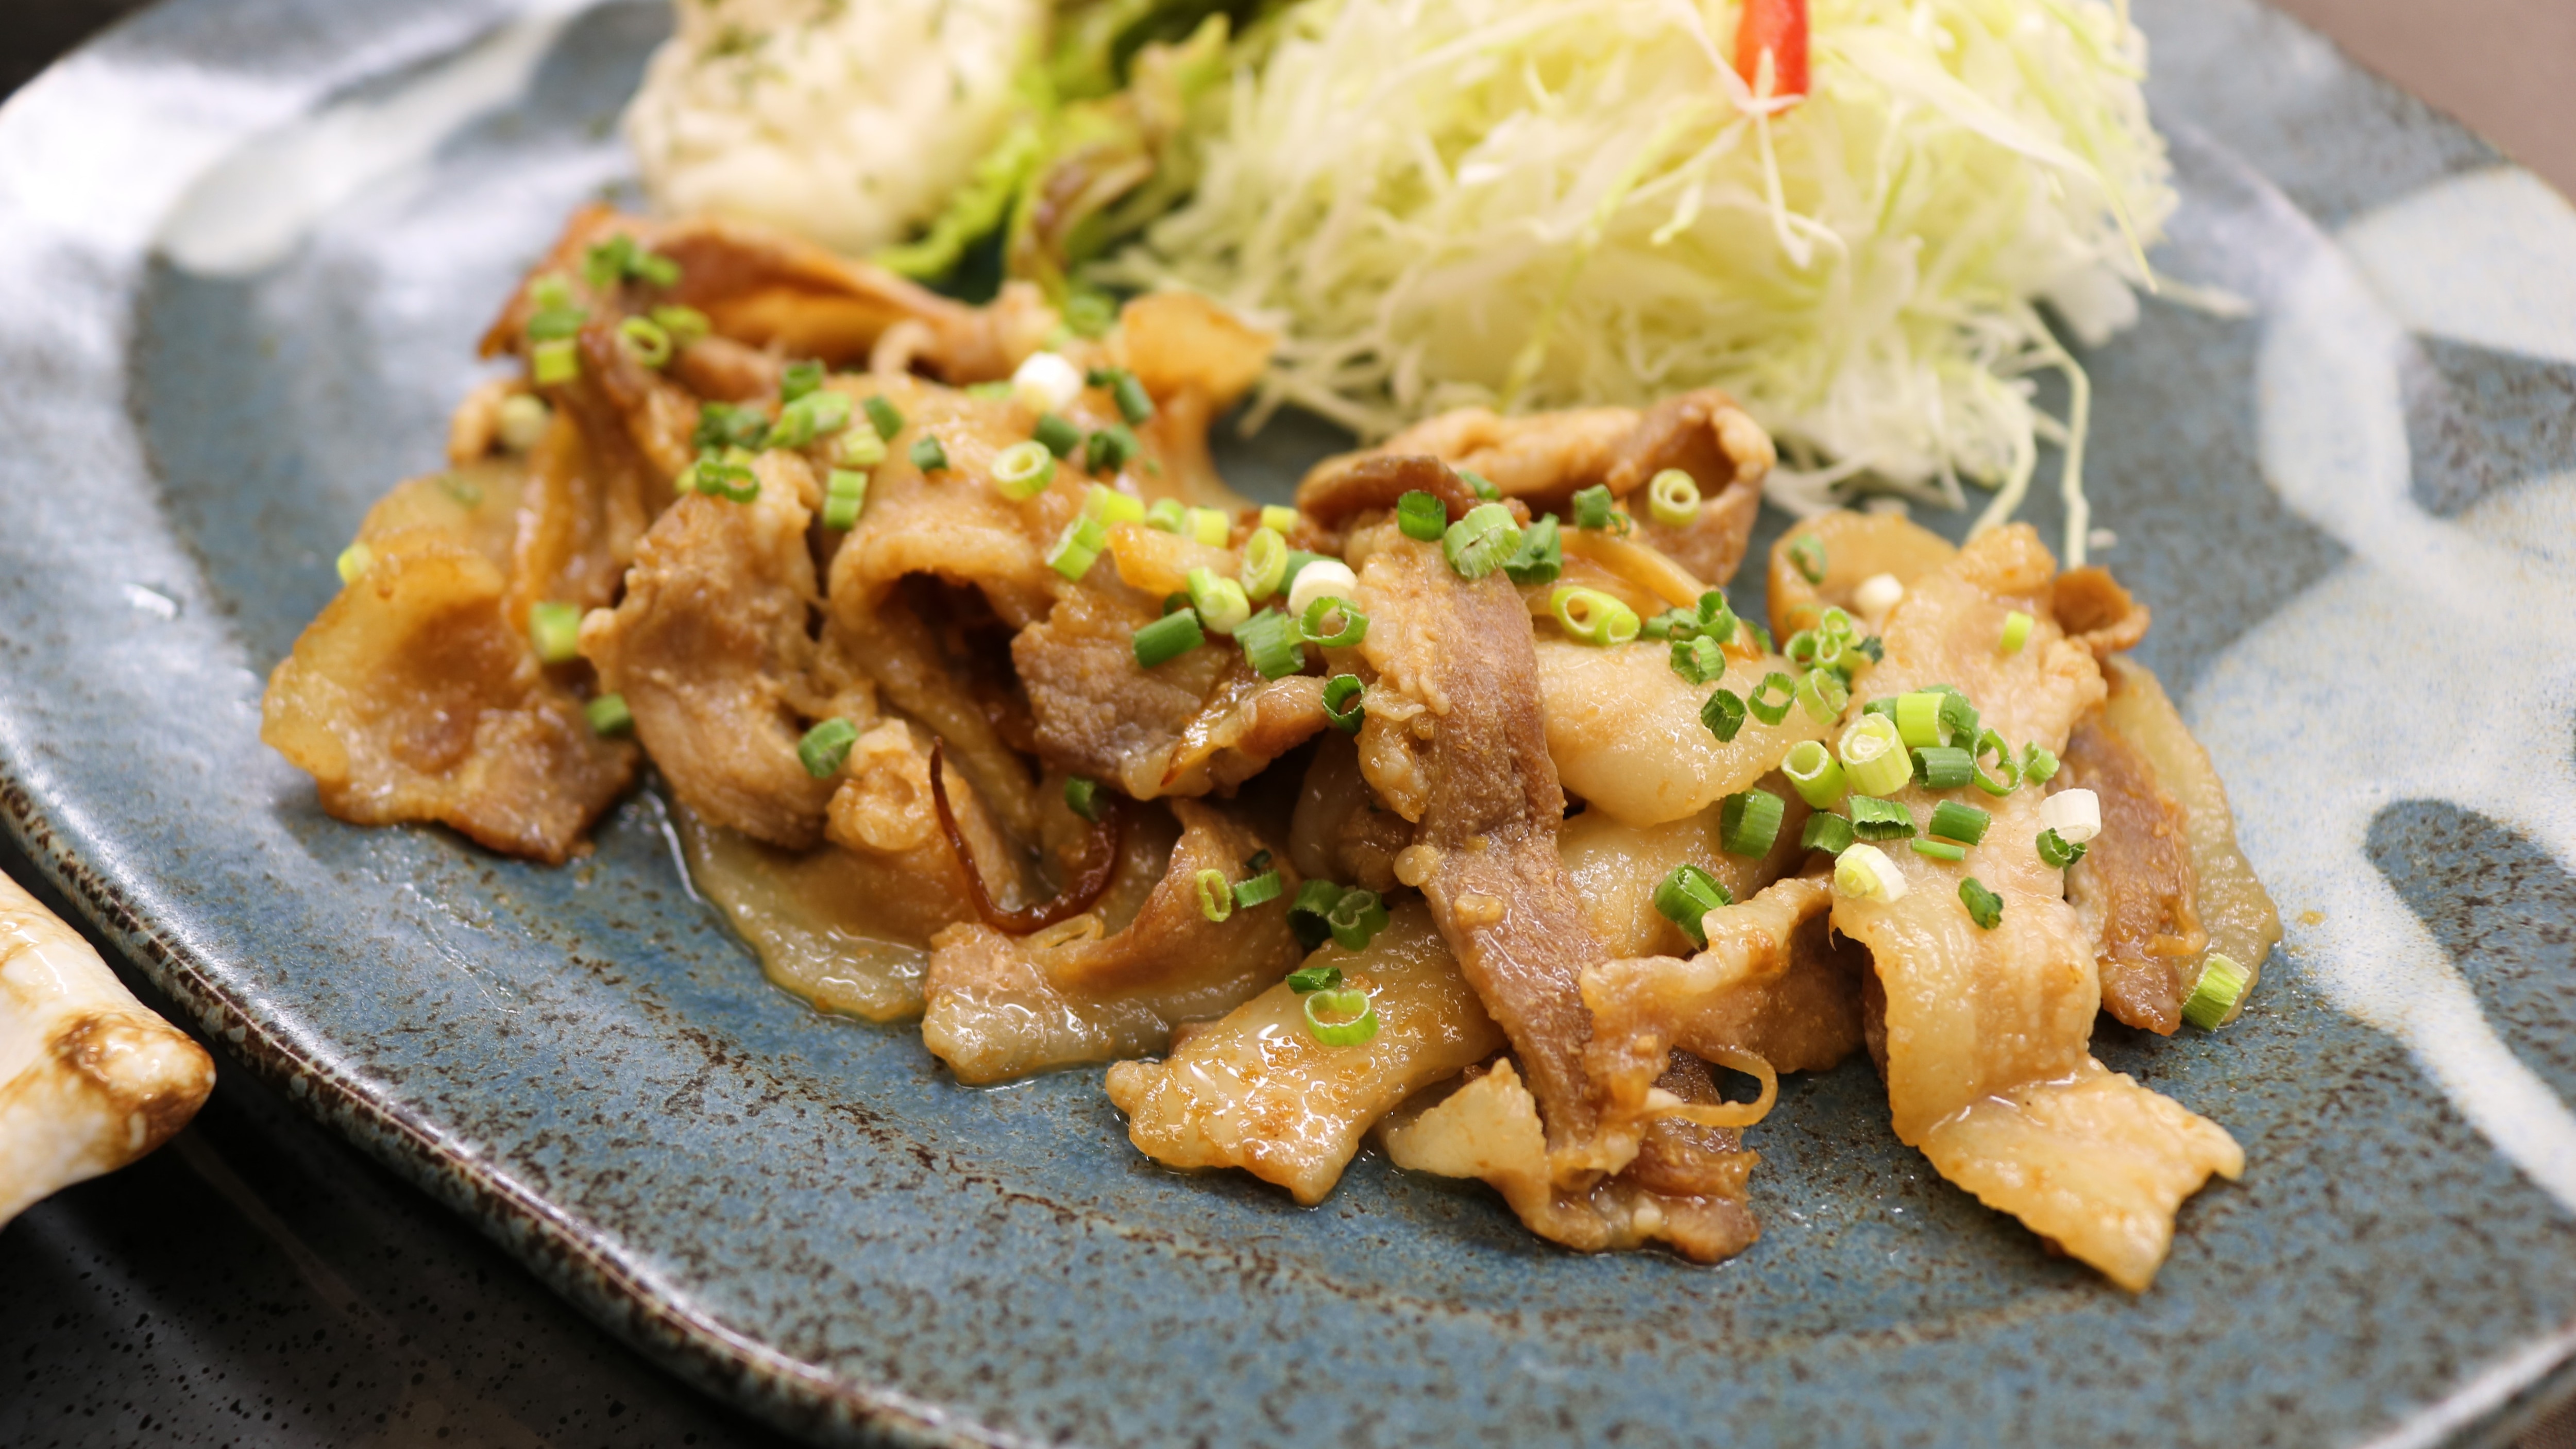 Dinner restaurant "Hanabatei" Recommended set meal "Kurobuta ginger grilled"